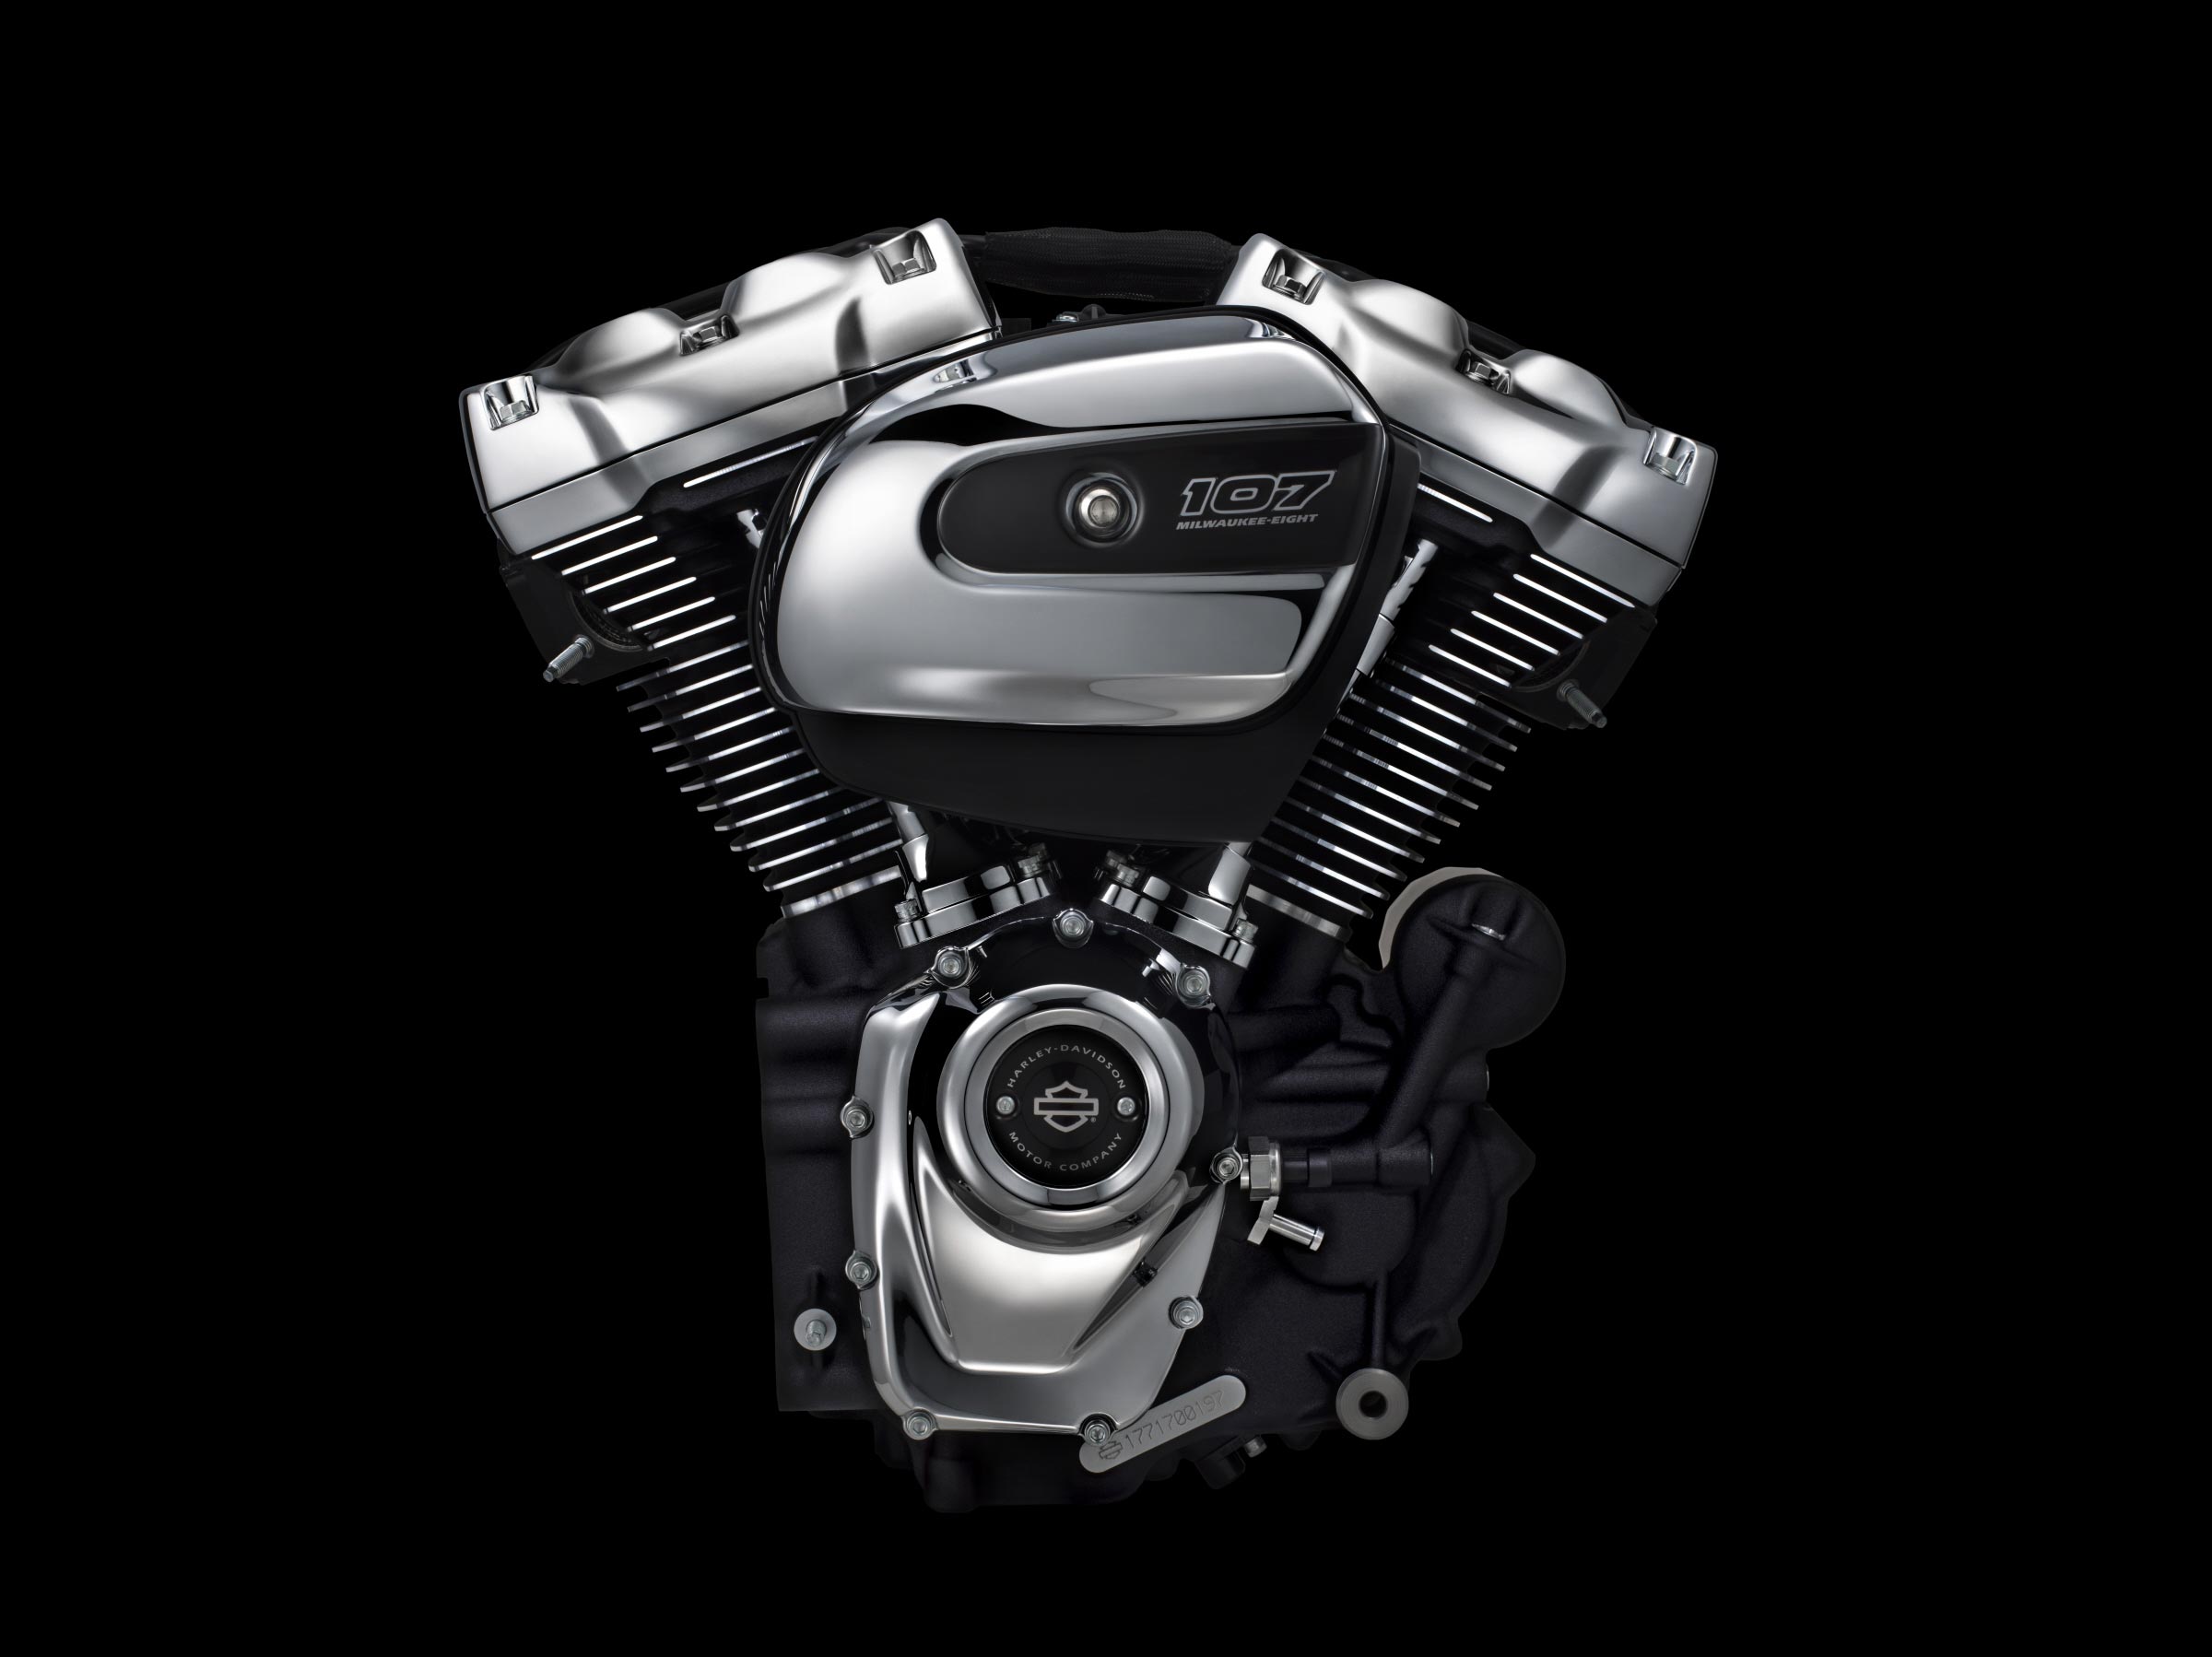 The New Harley-Davidson Milwaukee-Eight Engine Debuts